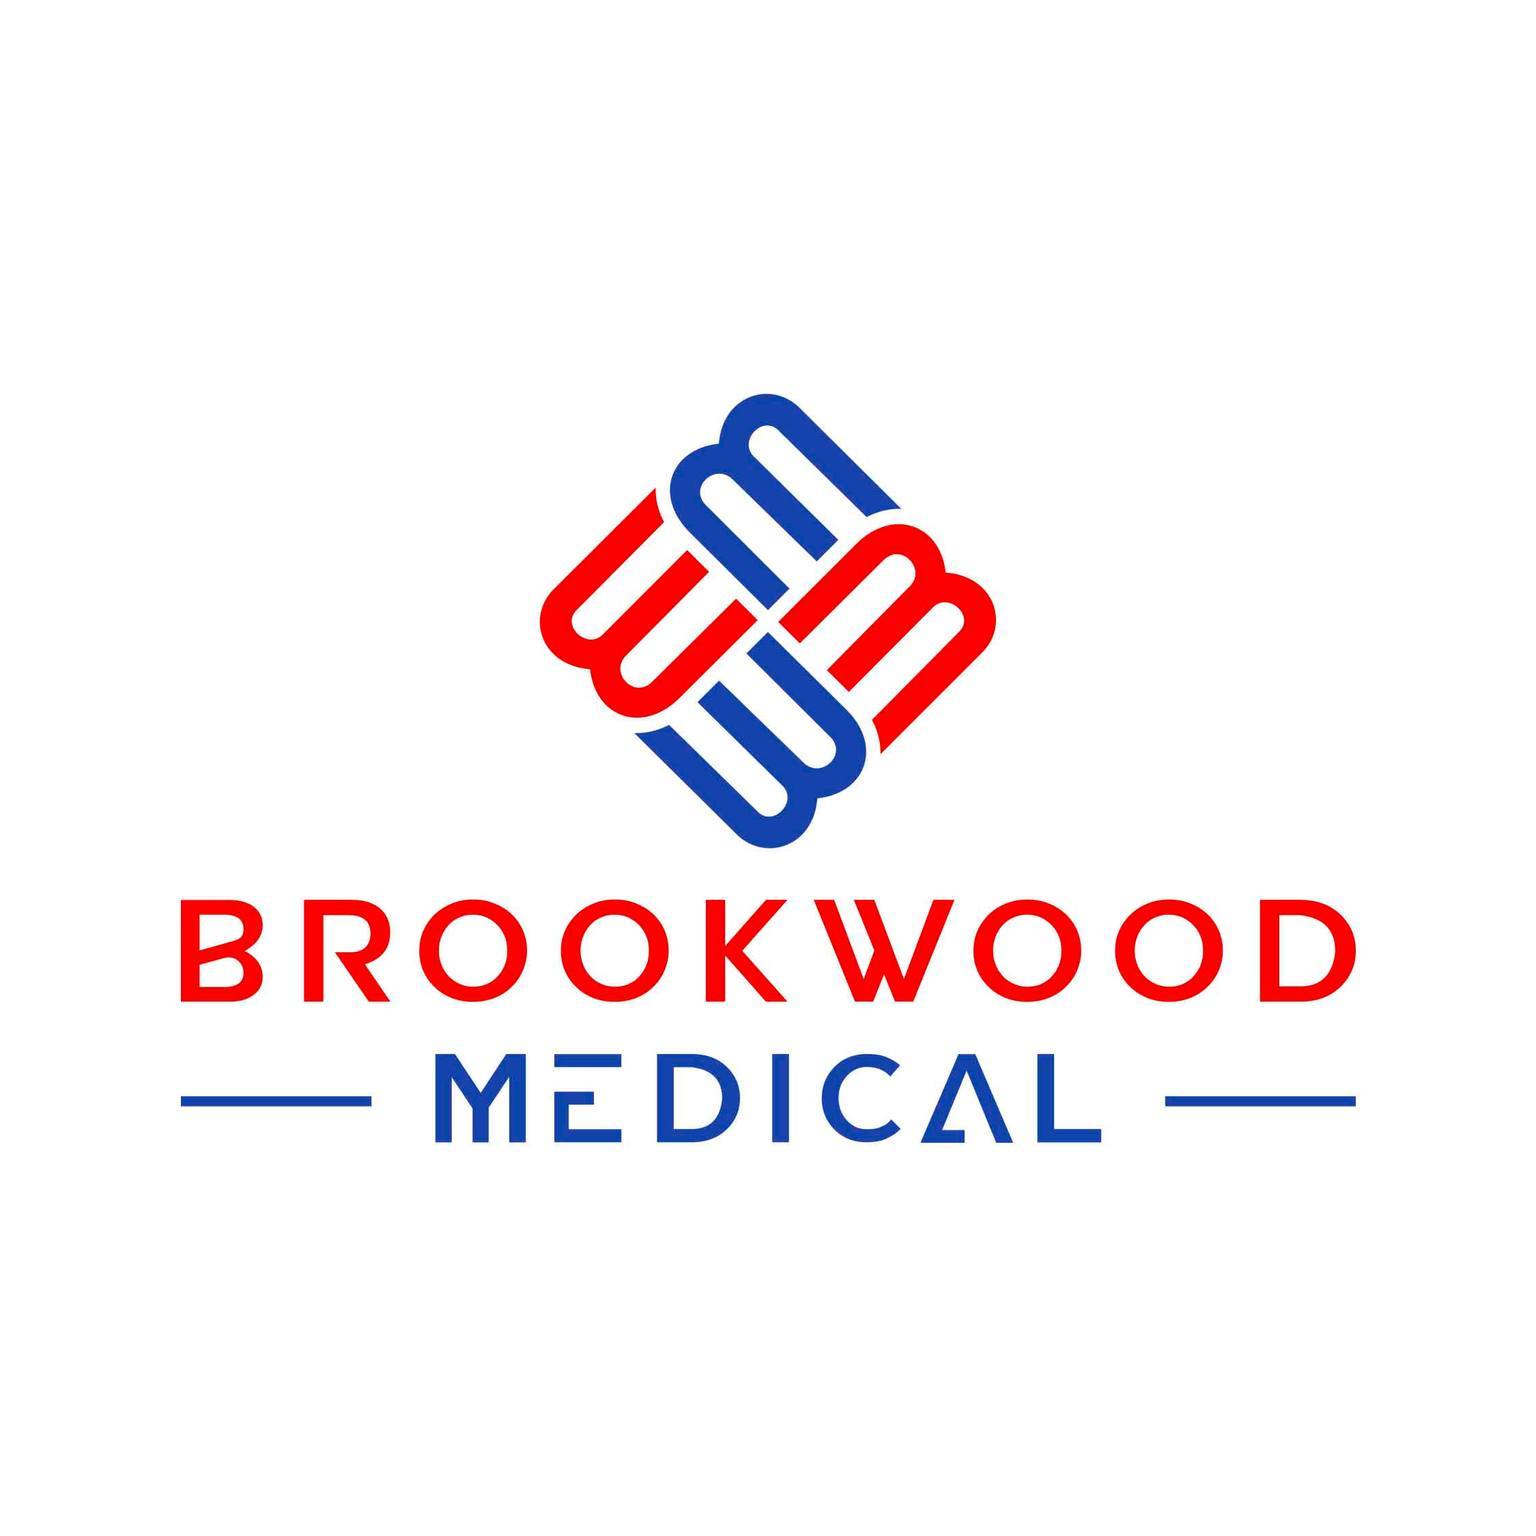 Brookwood Medical Coupon Codes